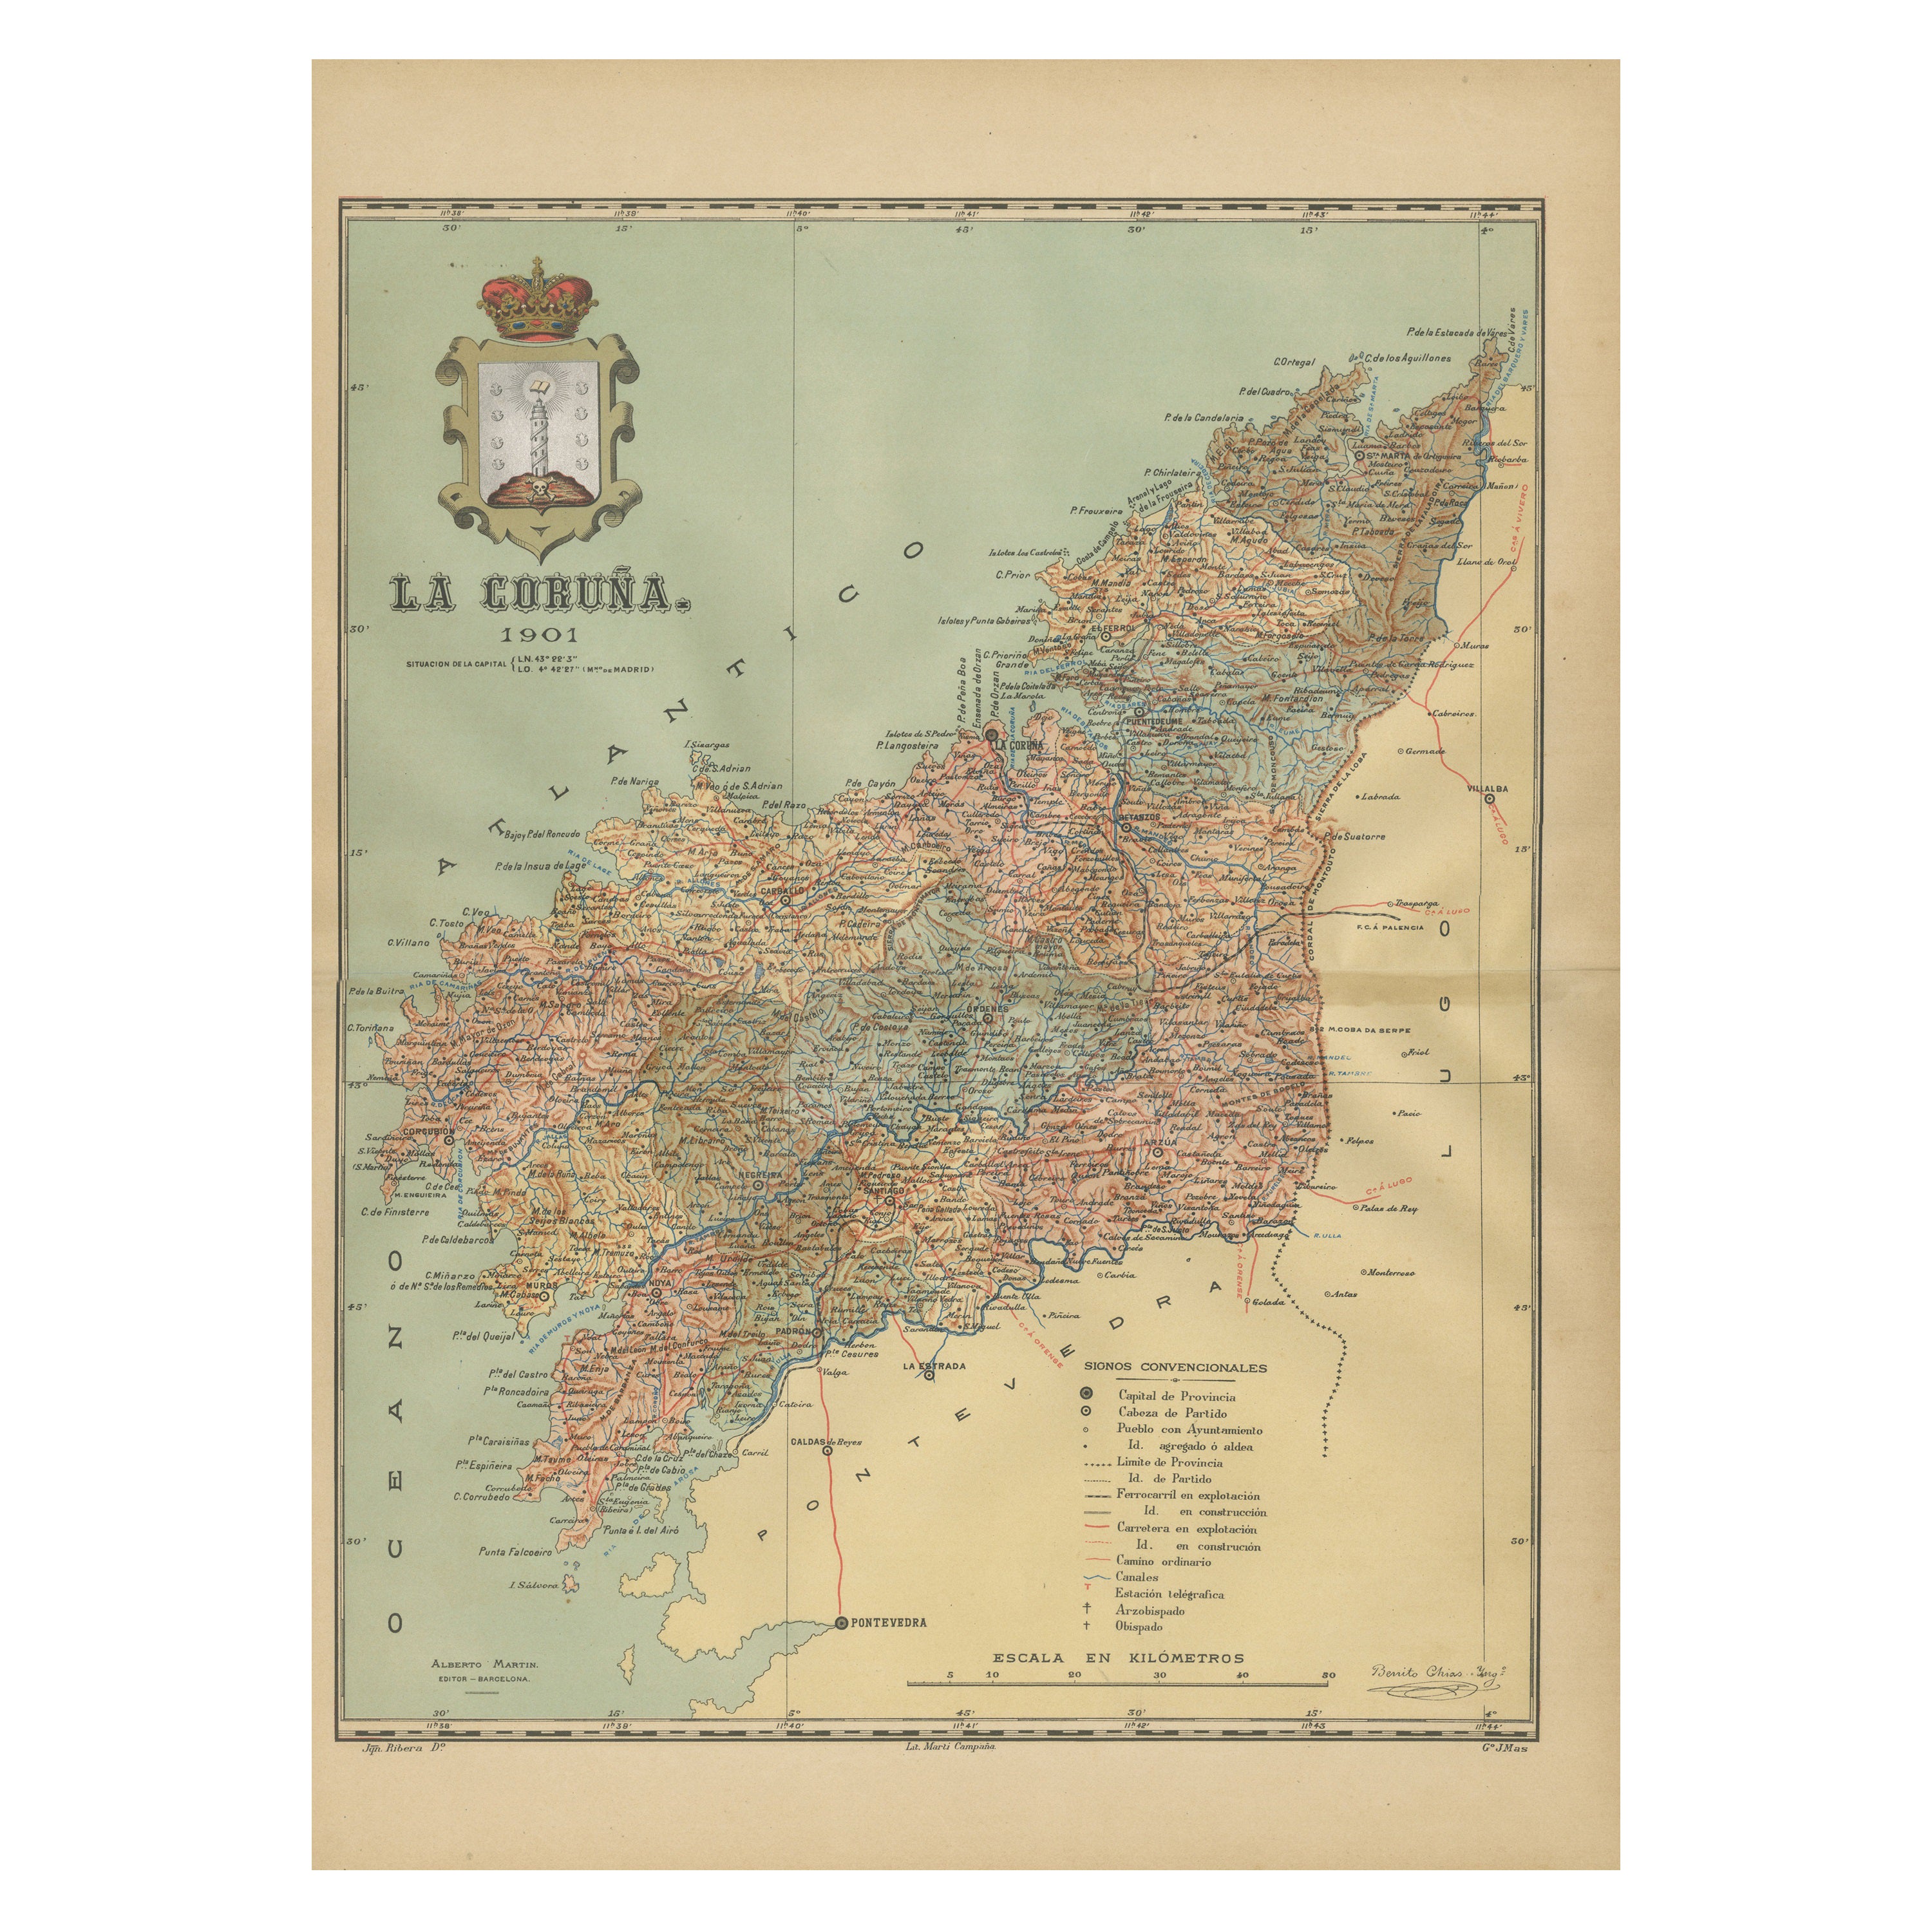 La Corogne 1901 : Une vue cartographique de la province maritime de Galicia